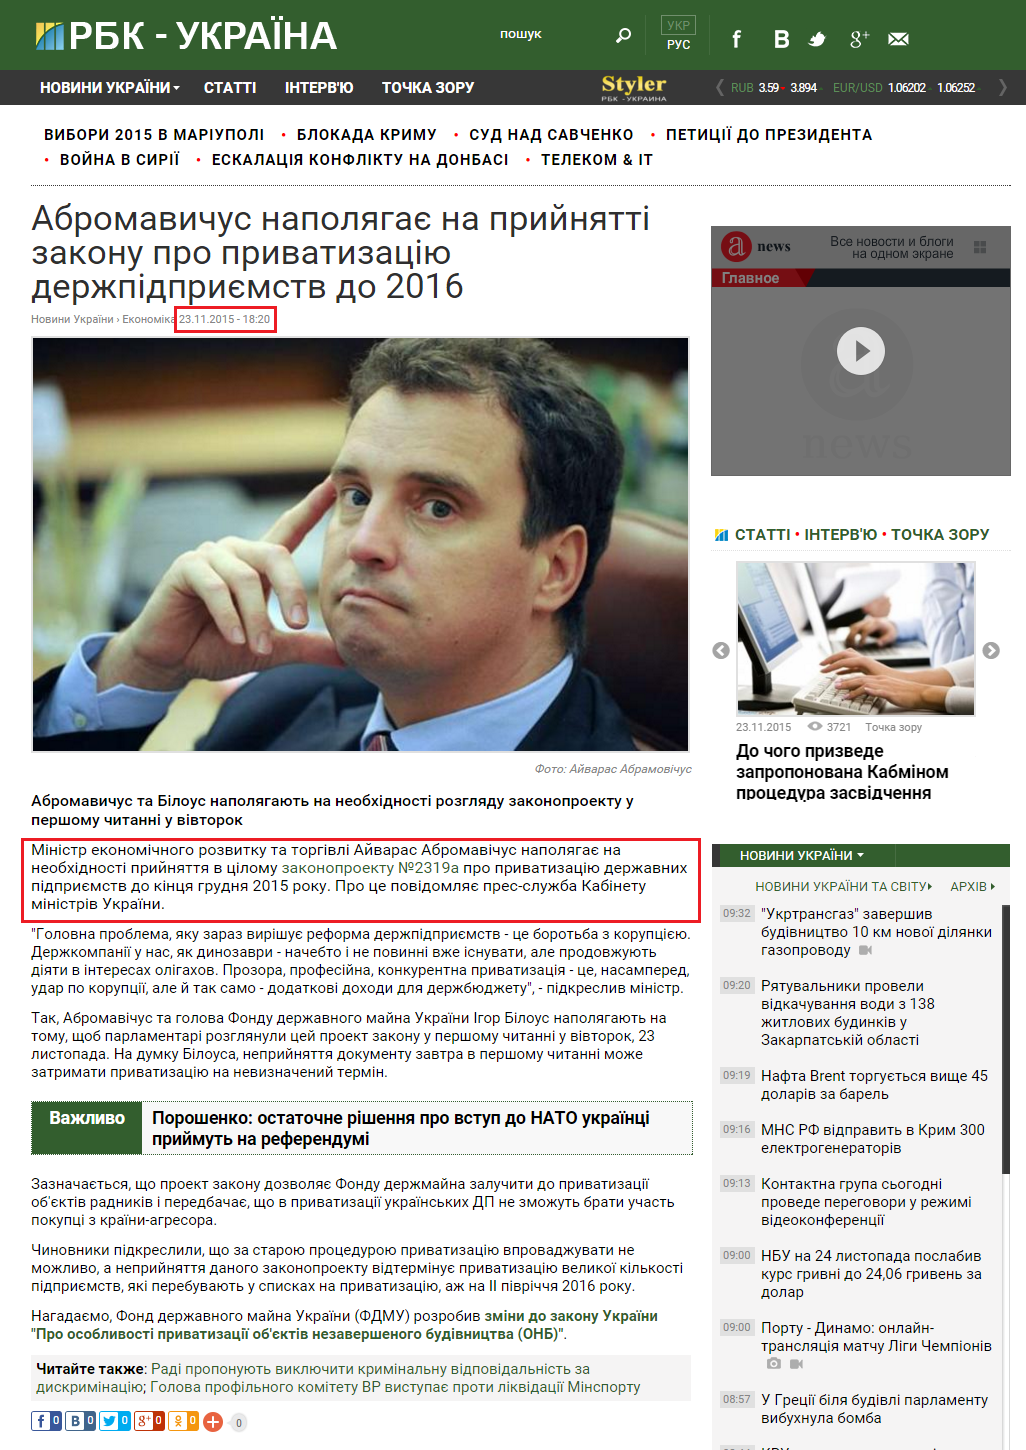 http://www.rbc.ua/ukr/news/abromavichus-nastaivaet-prinyatii-zakona-1448295706.html